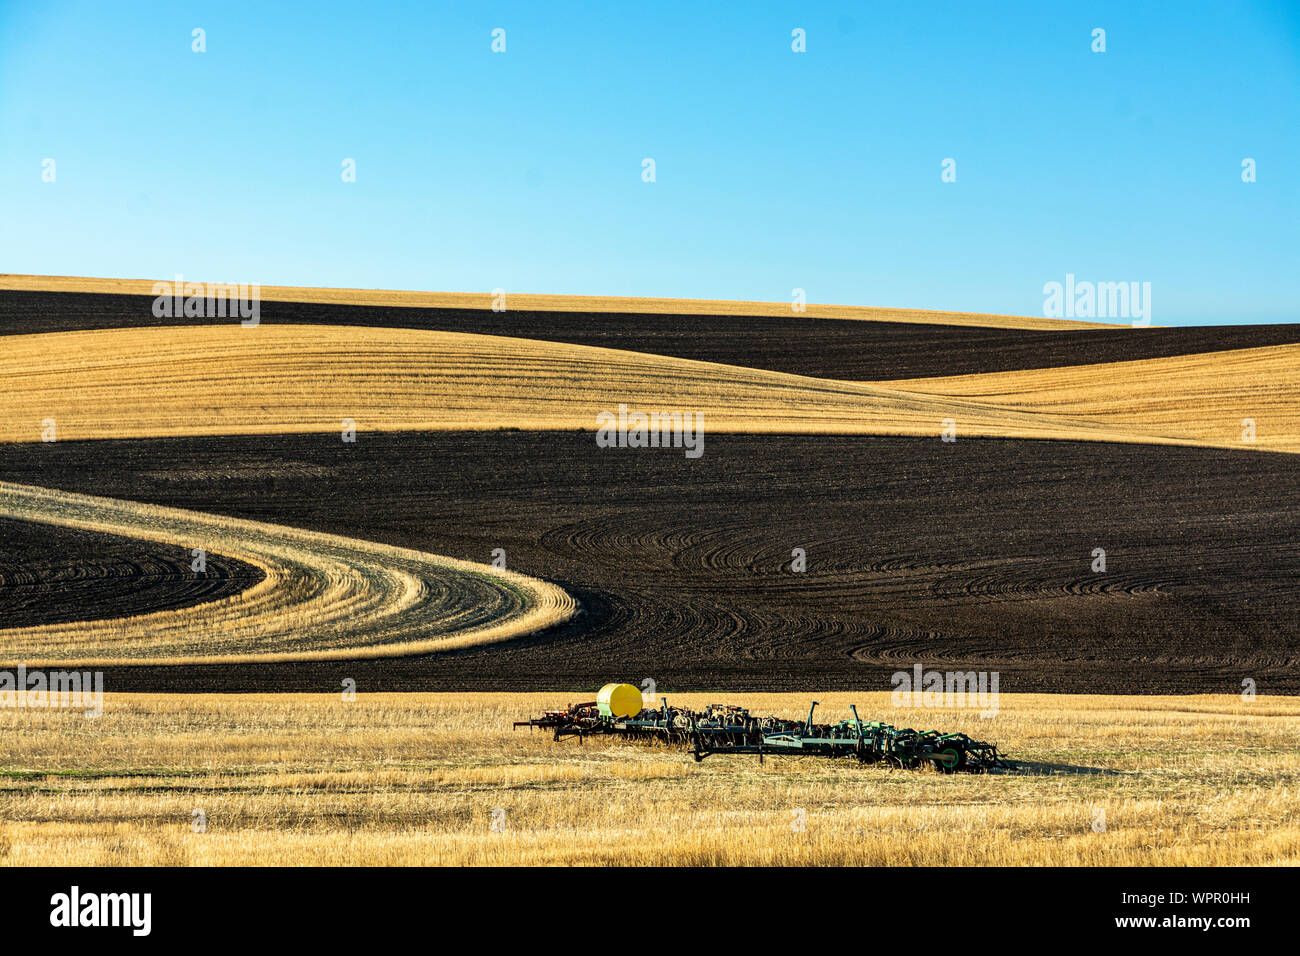 Washington, Palouse Region, Hwy 26, fall season after harvest, farm implement Stock Photo